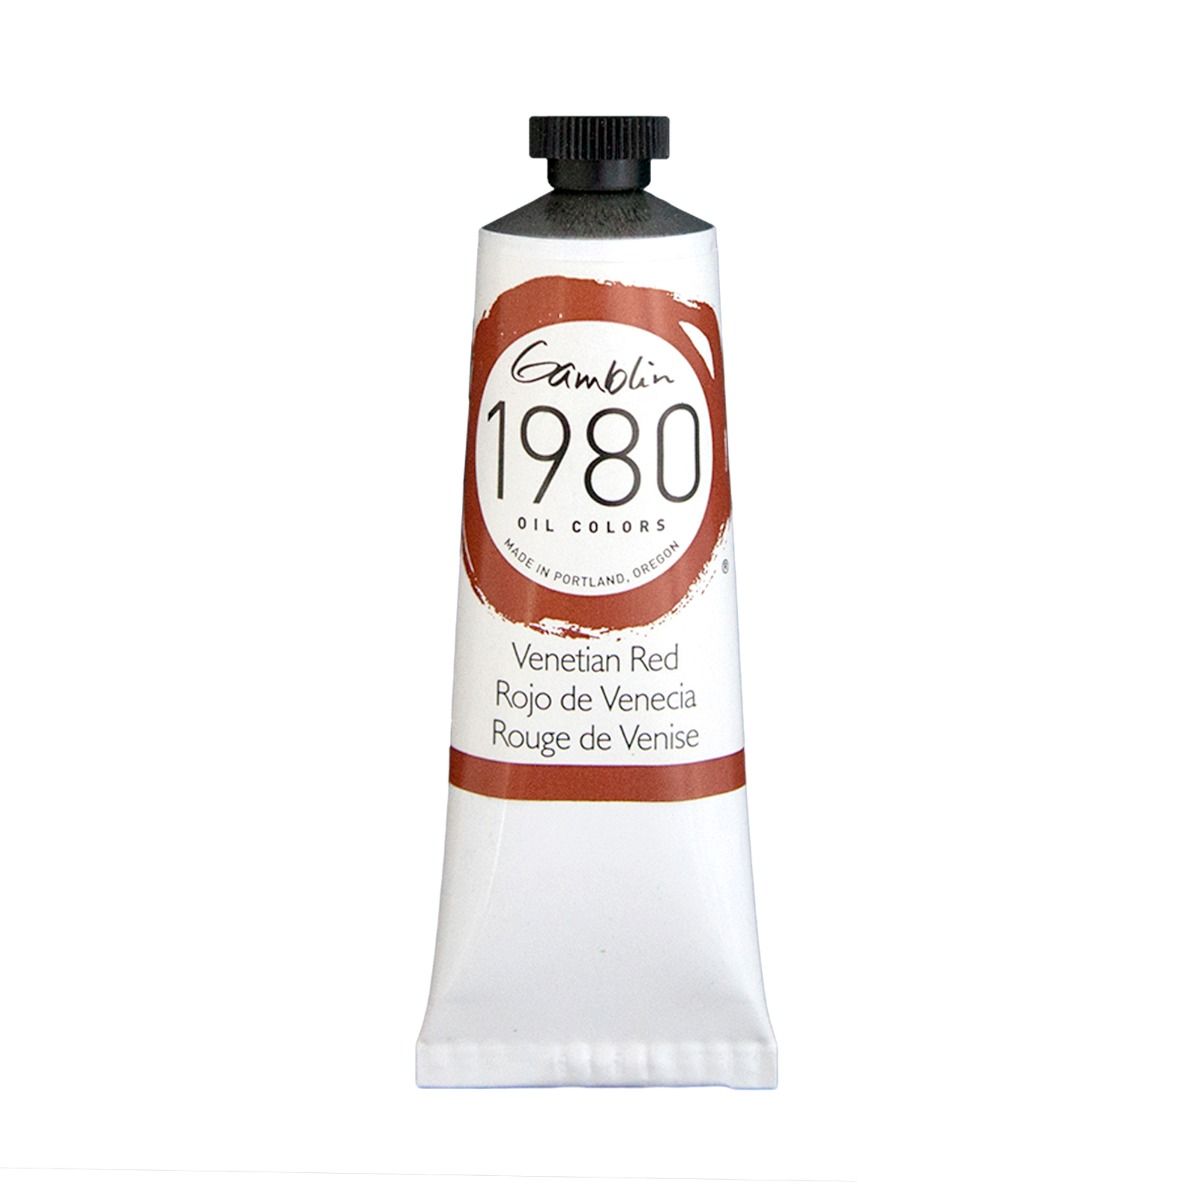 Gamblin 1980 Oils - Venetian Red, 37 ml (1.25oz)